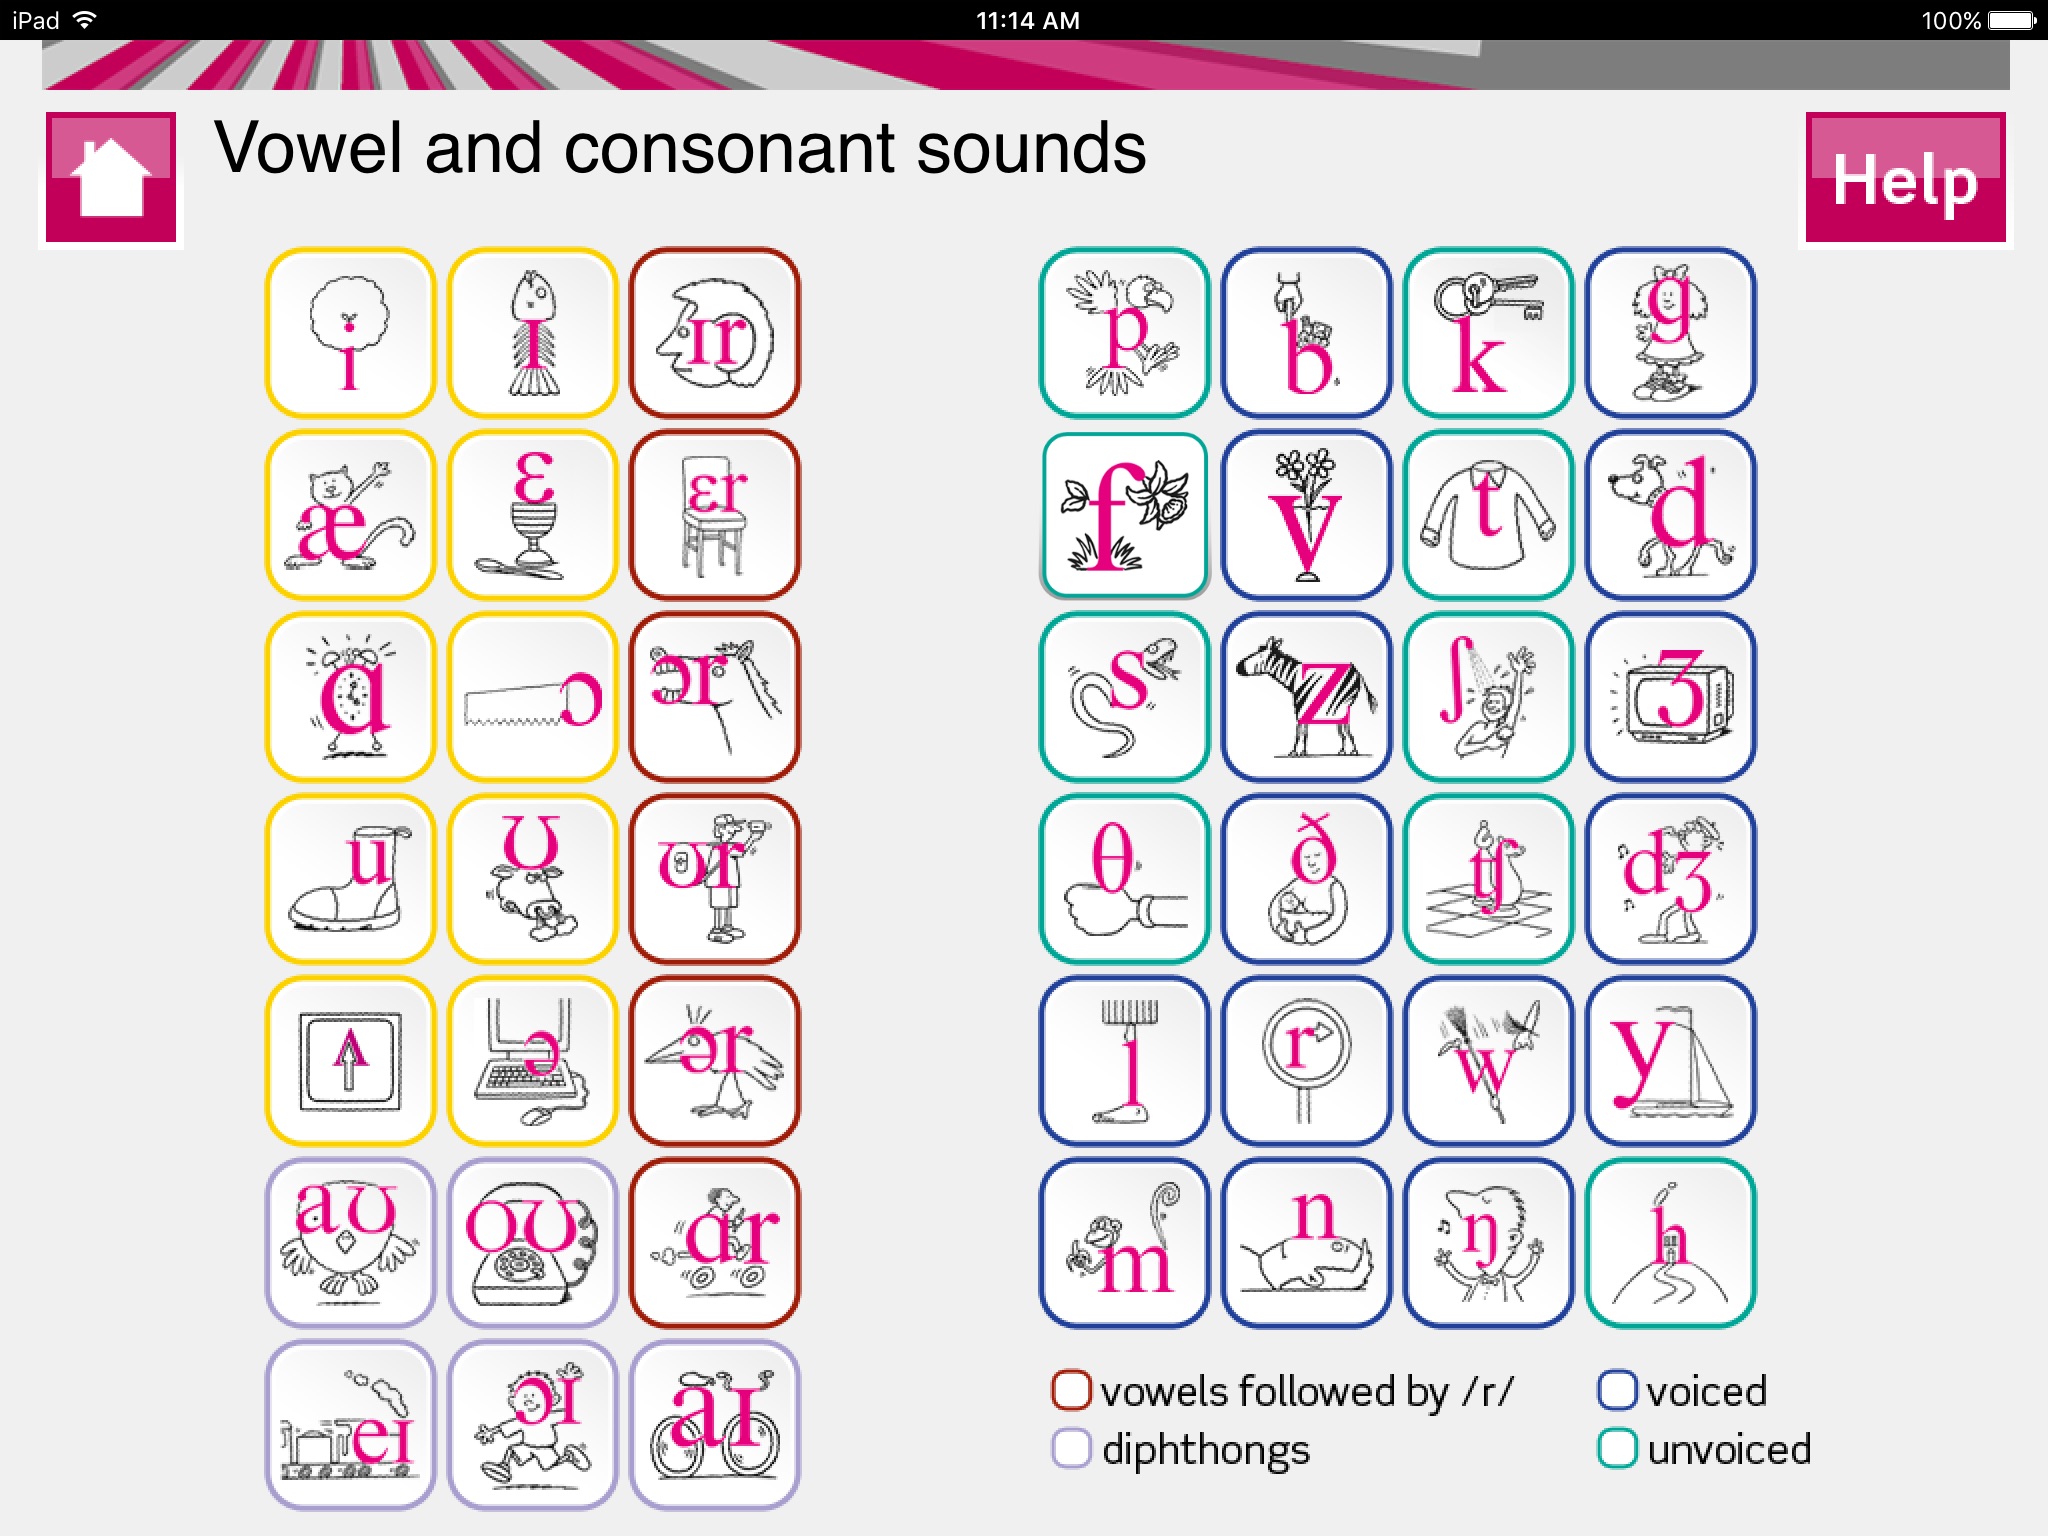 Pronunciation Chart English Sounds